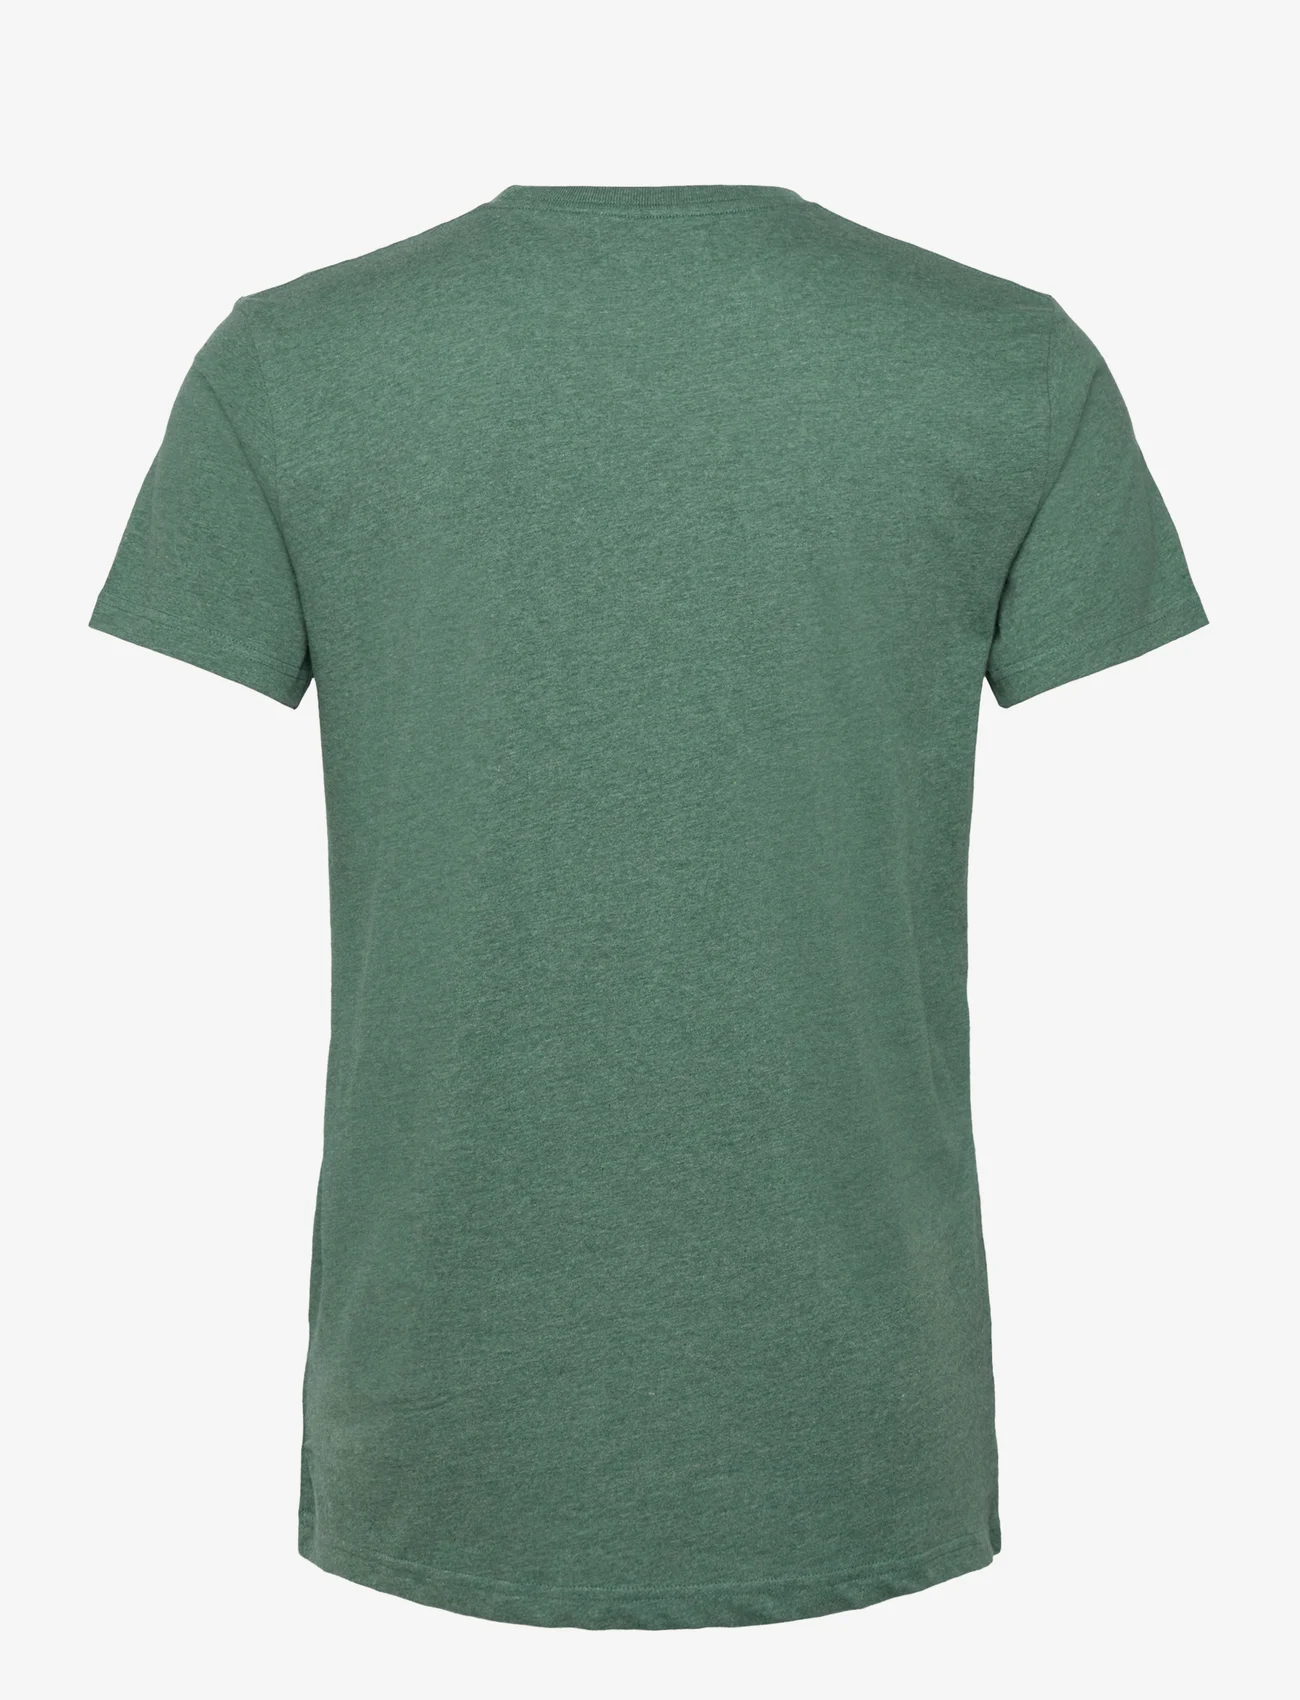 Revolution - Regular T-shirt - kortærmede t-shirts - dustgreen-melange - 1